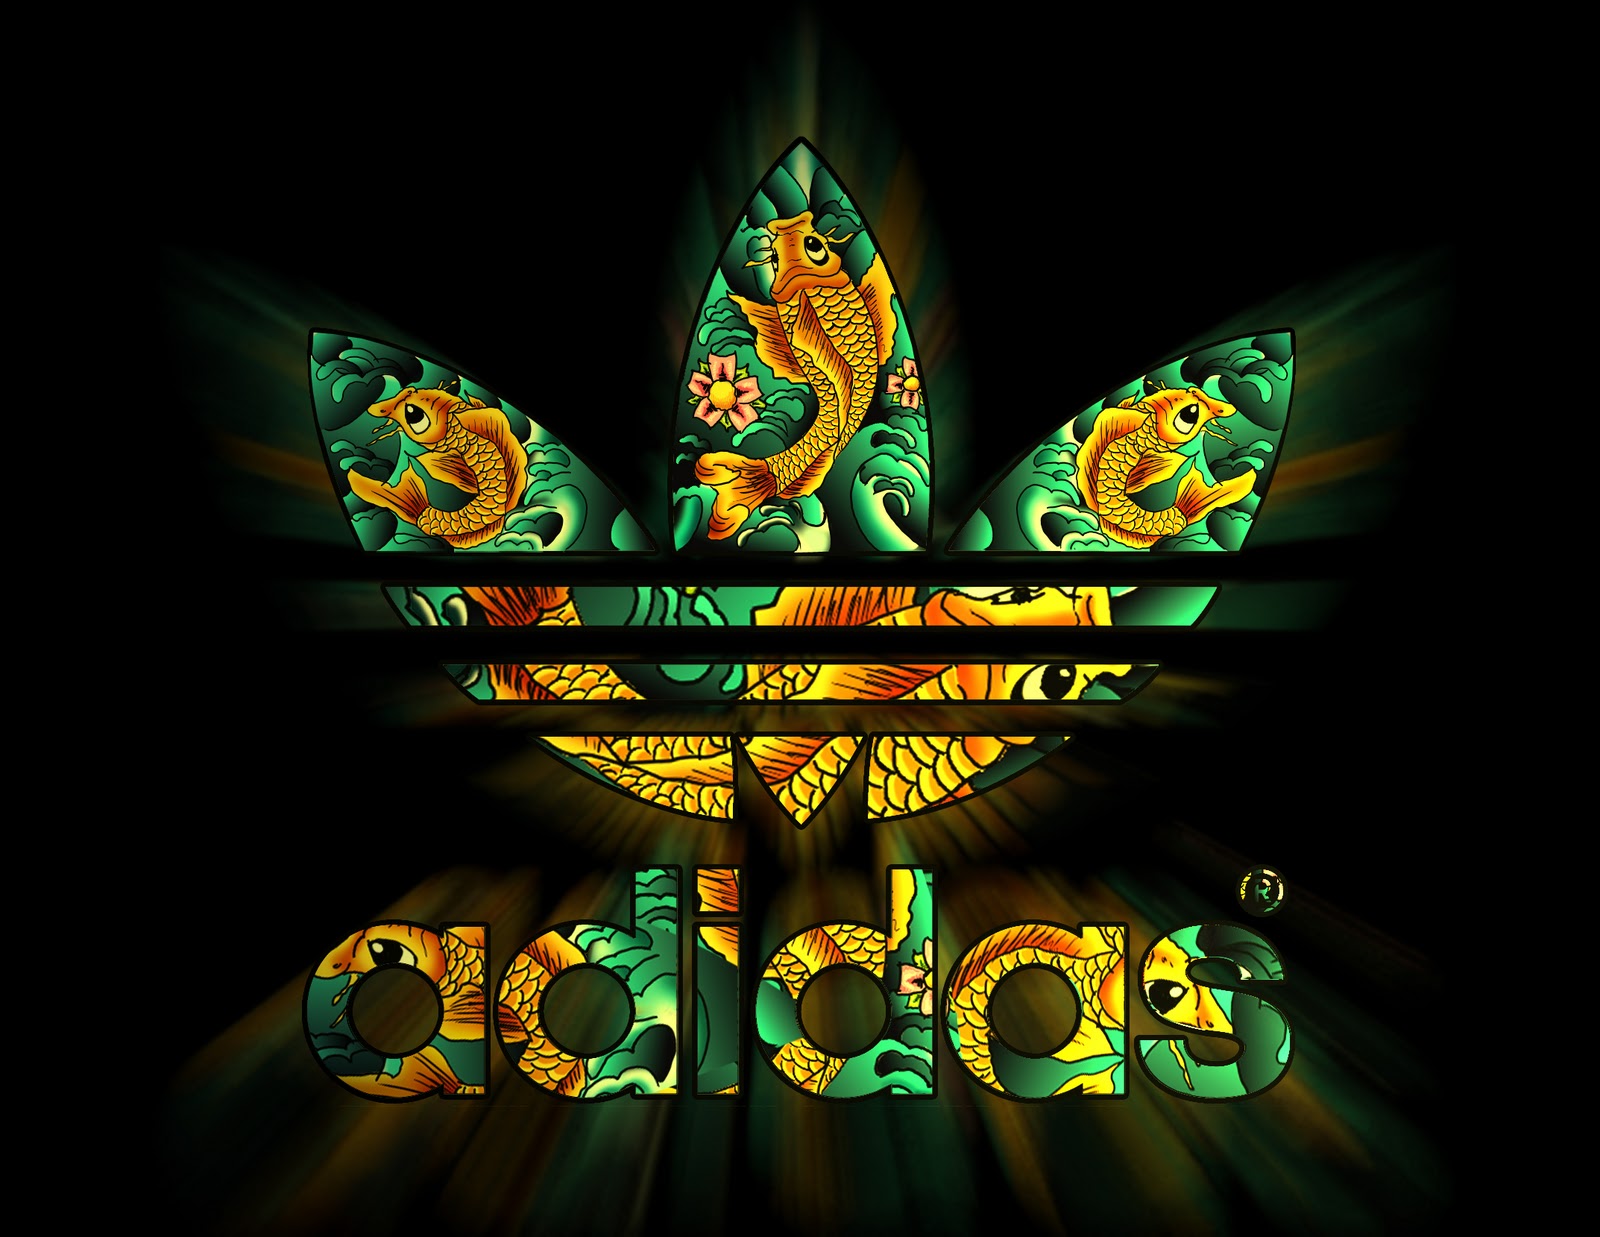 Adidas Logos